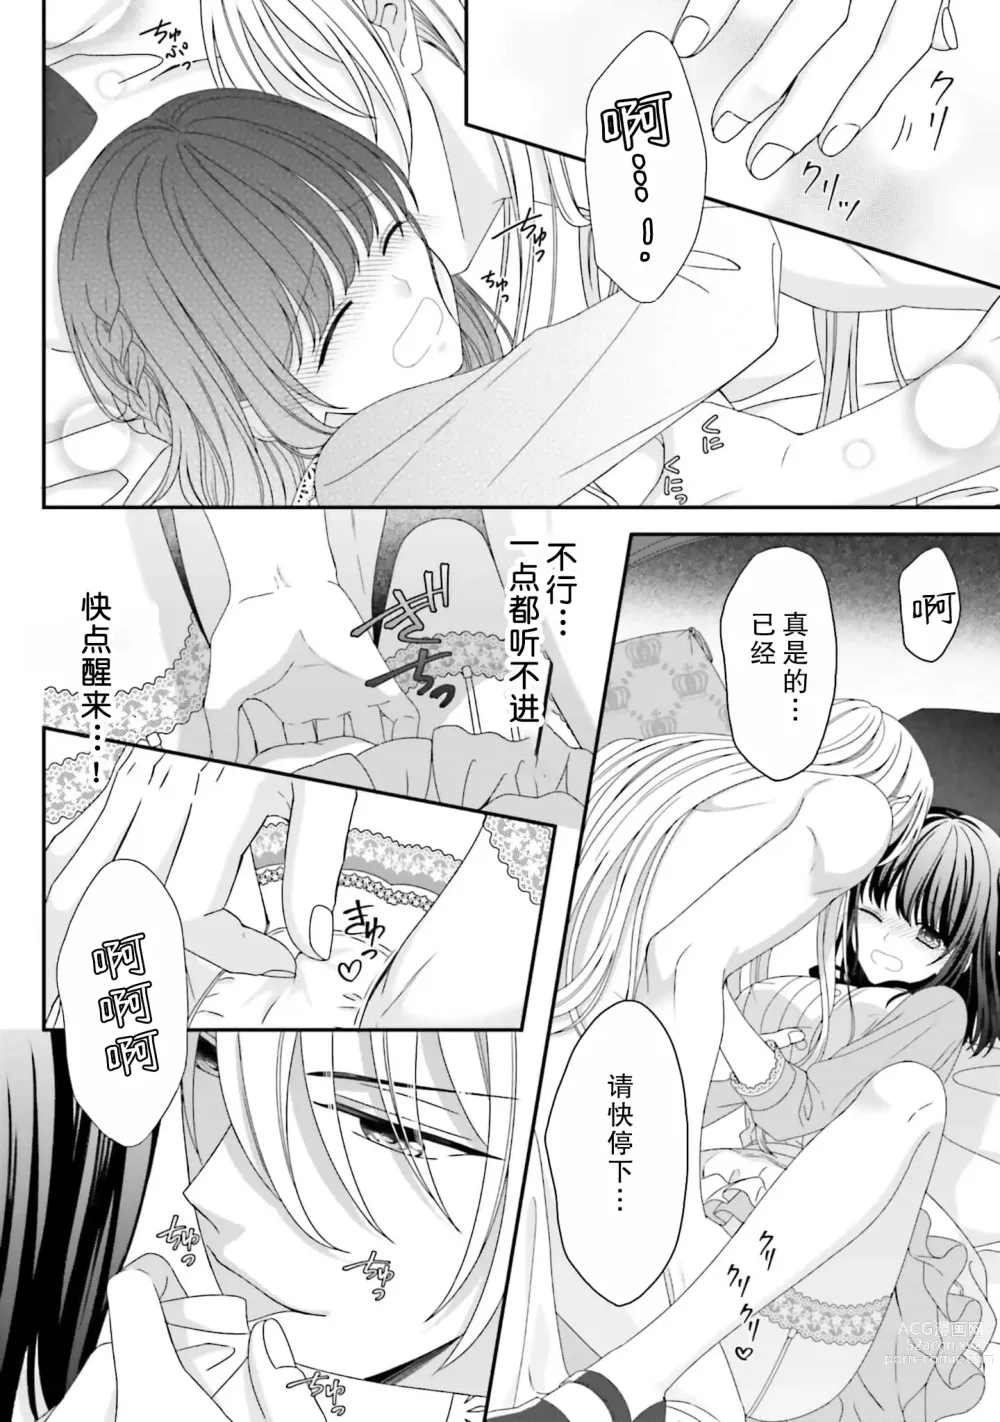 Page 9 of manga 在异世界被非凡的魔导师买下的话会被异常宠爱。 1-7